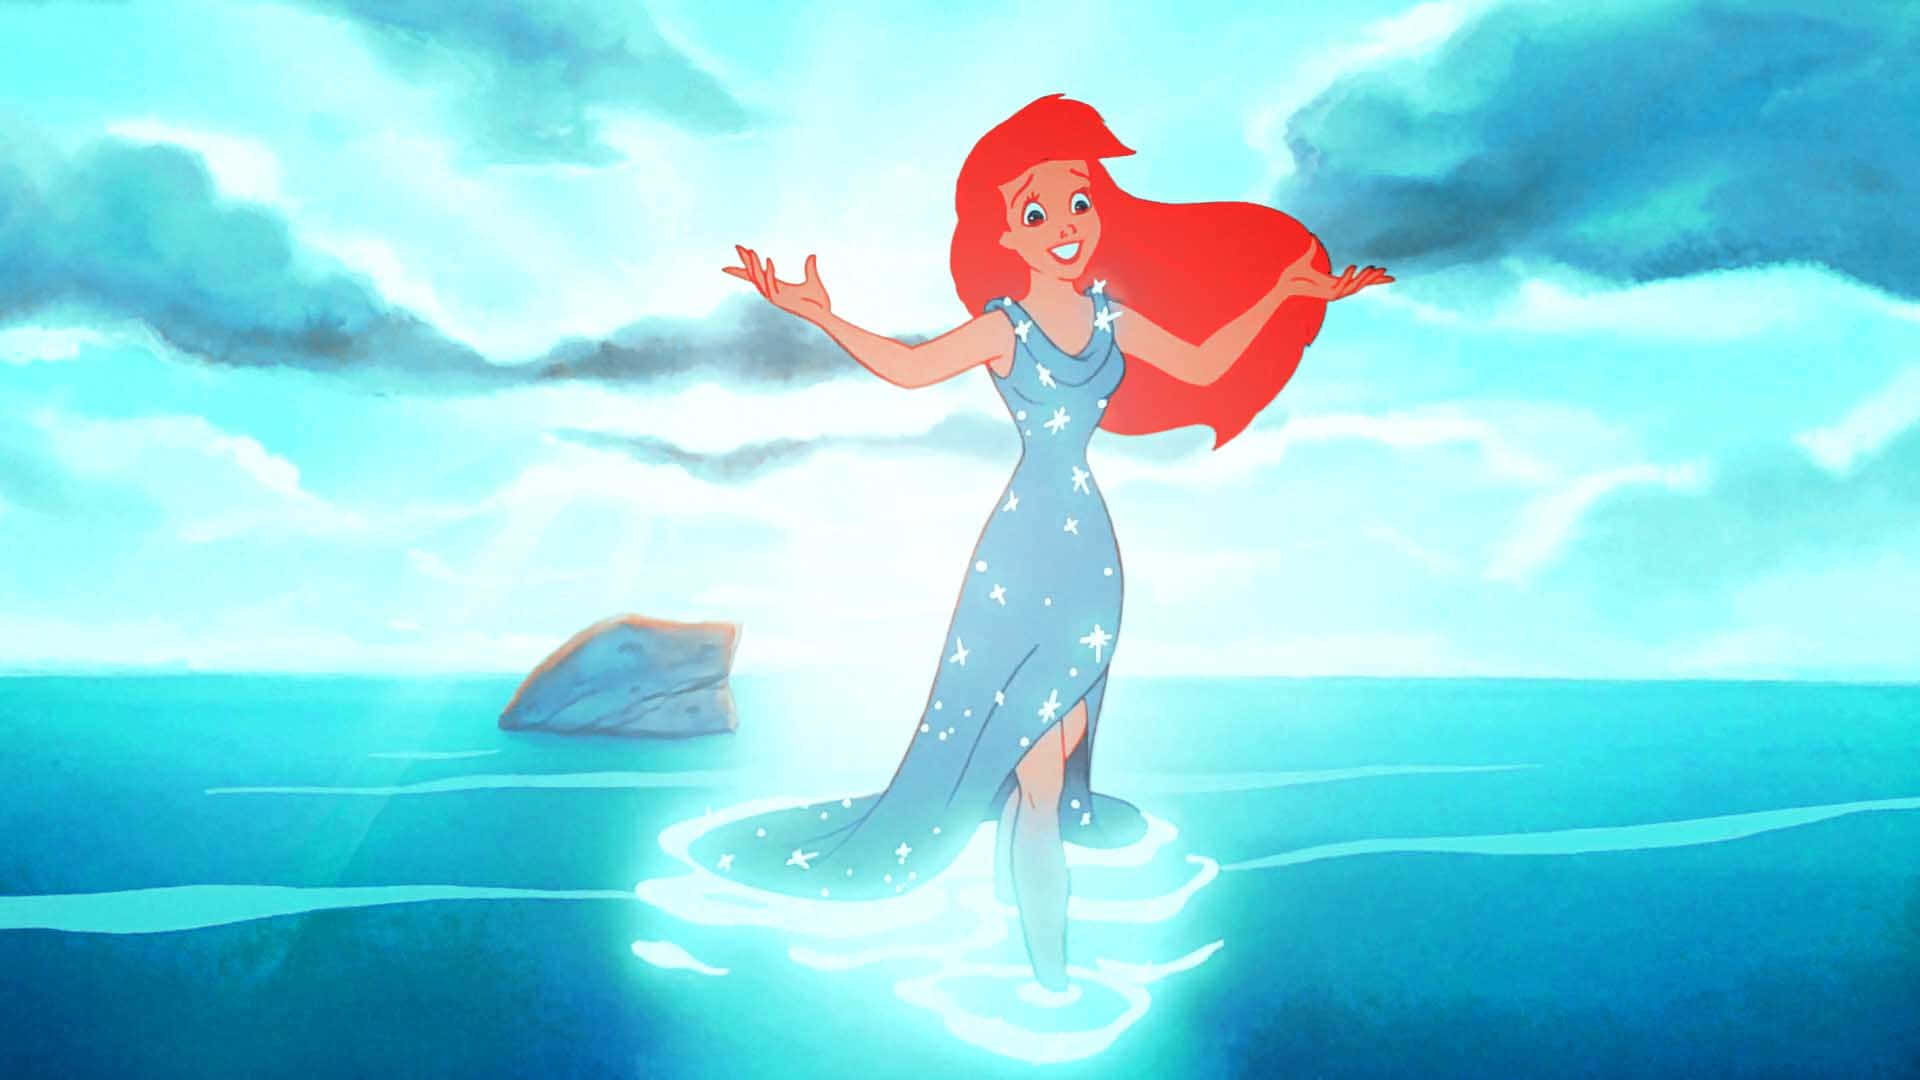 All of Ariel's dreams are coming true!